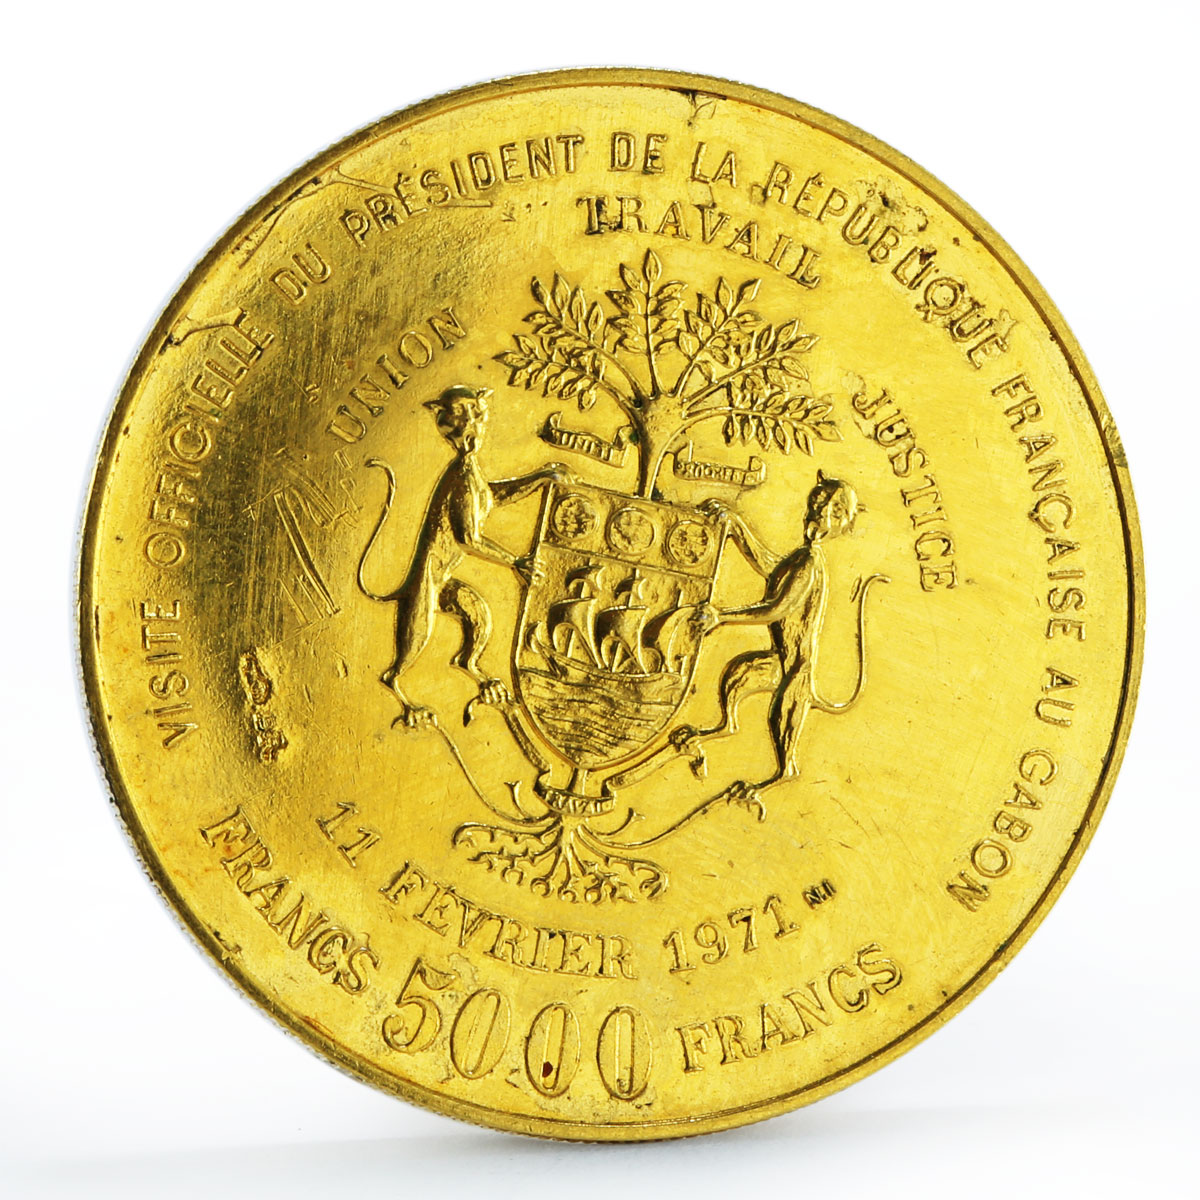 Gabon 5000 francs President Georges Pompidou Visit essai brass coin 1971